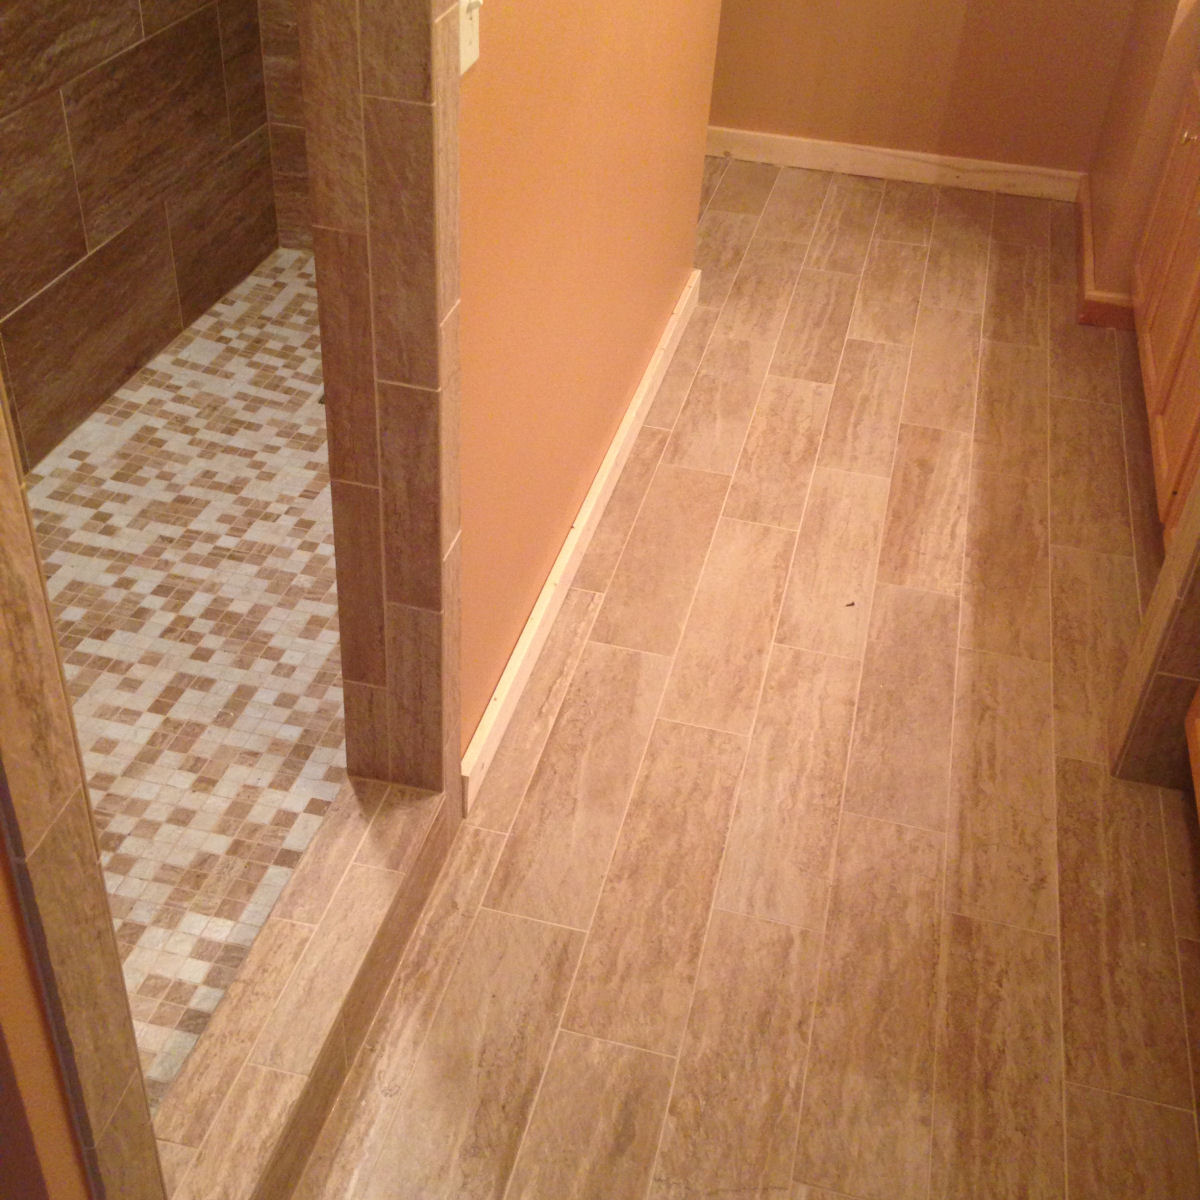 Bathroom Laminate Floor